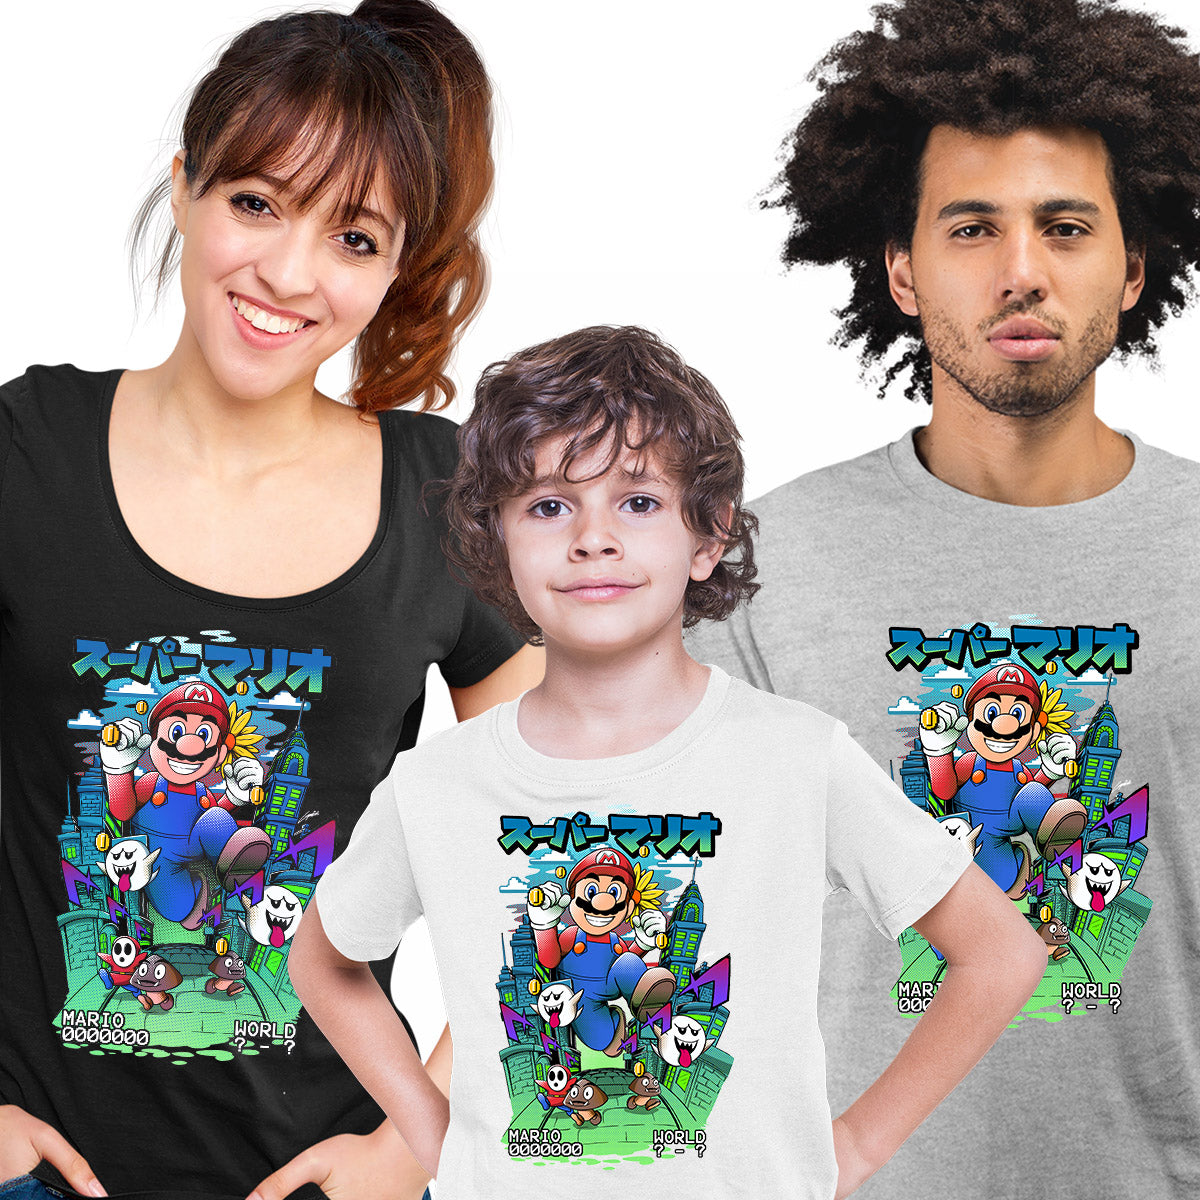 Super Mario Bros Run Nostalgia Gaming T-shirt